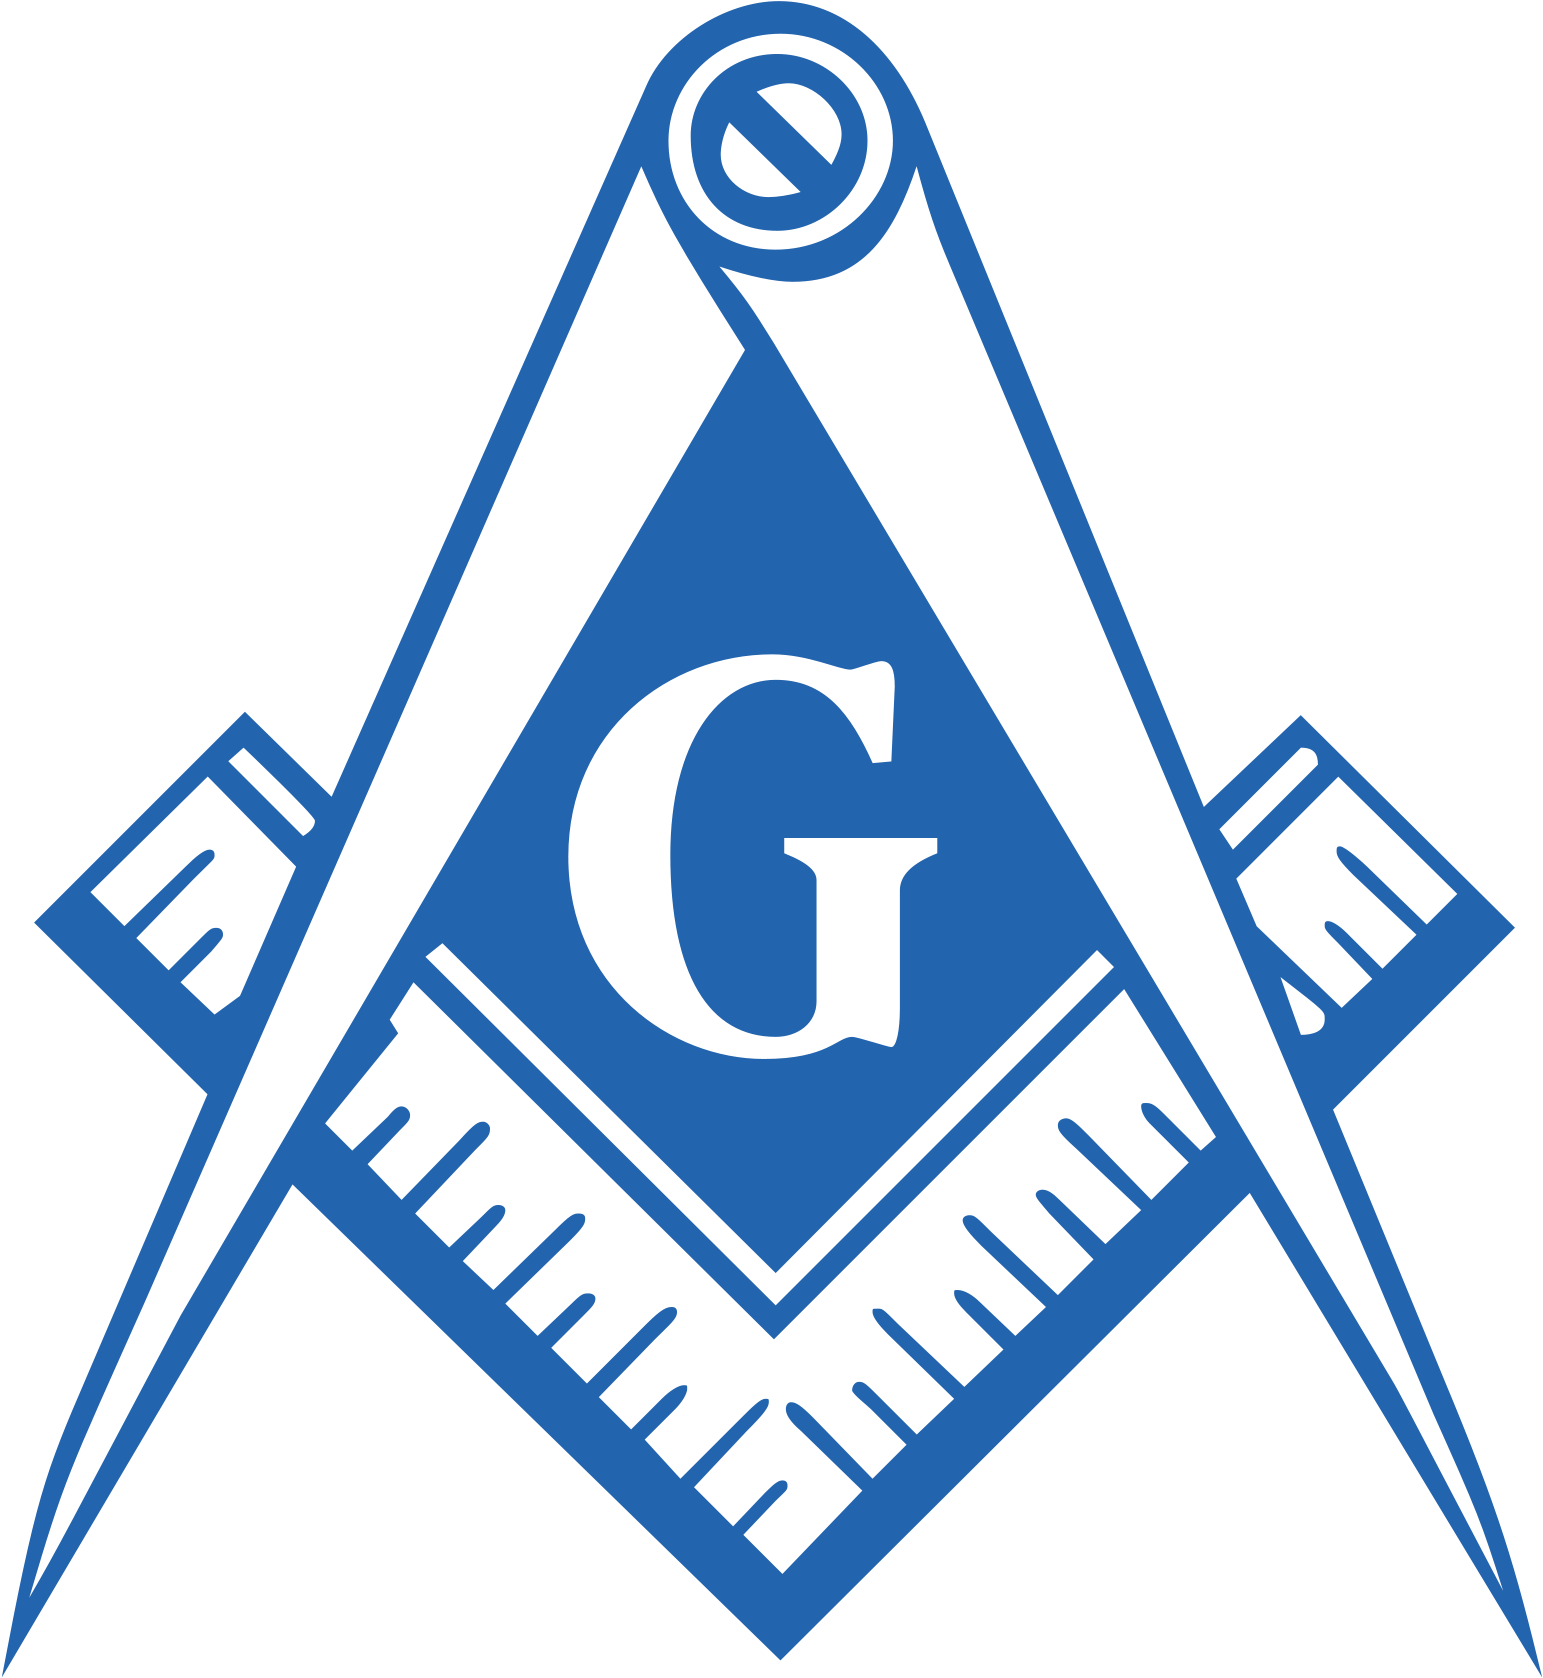 Masonic Compass And Square - Freemason Sign Without G (1579x1741)